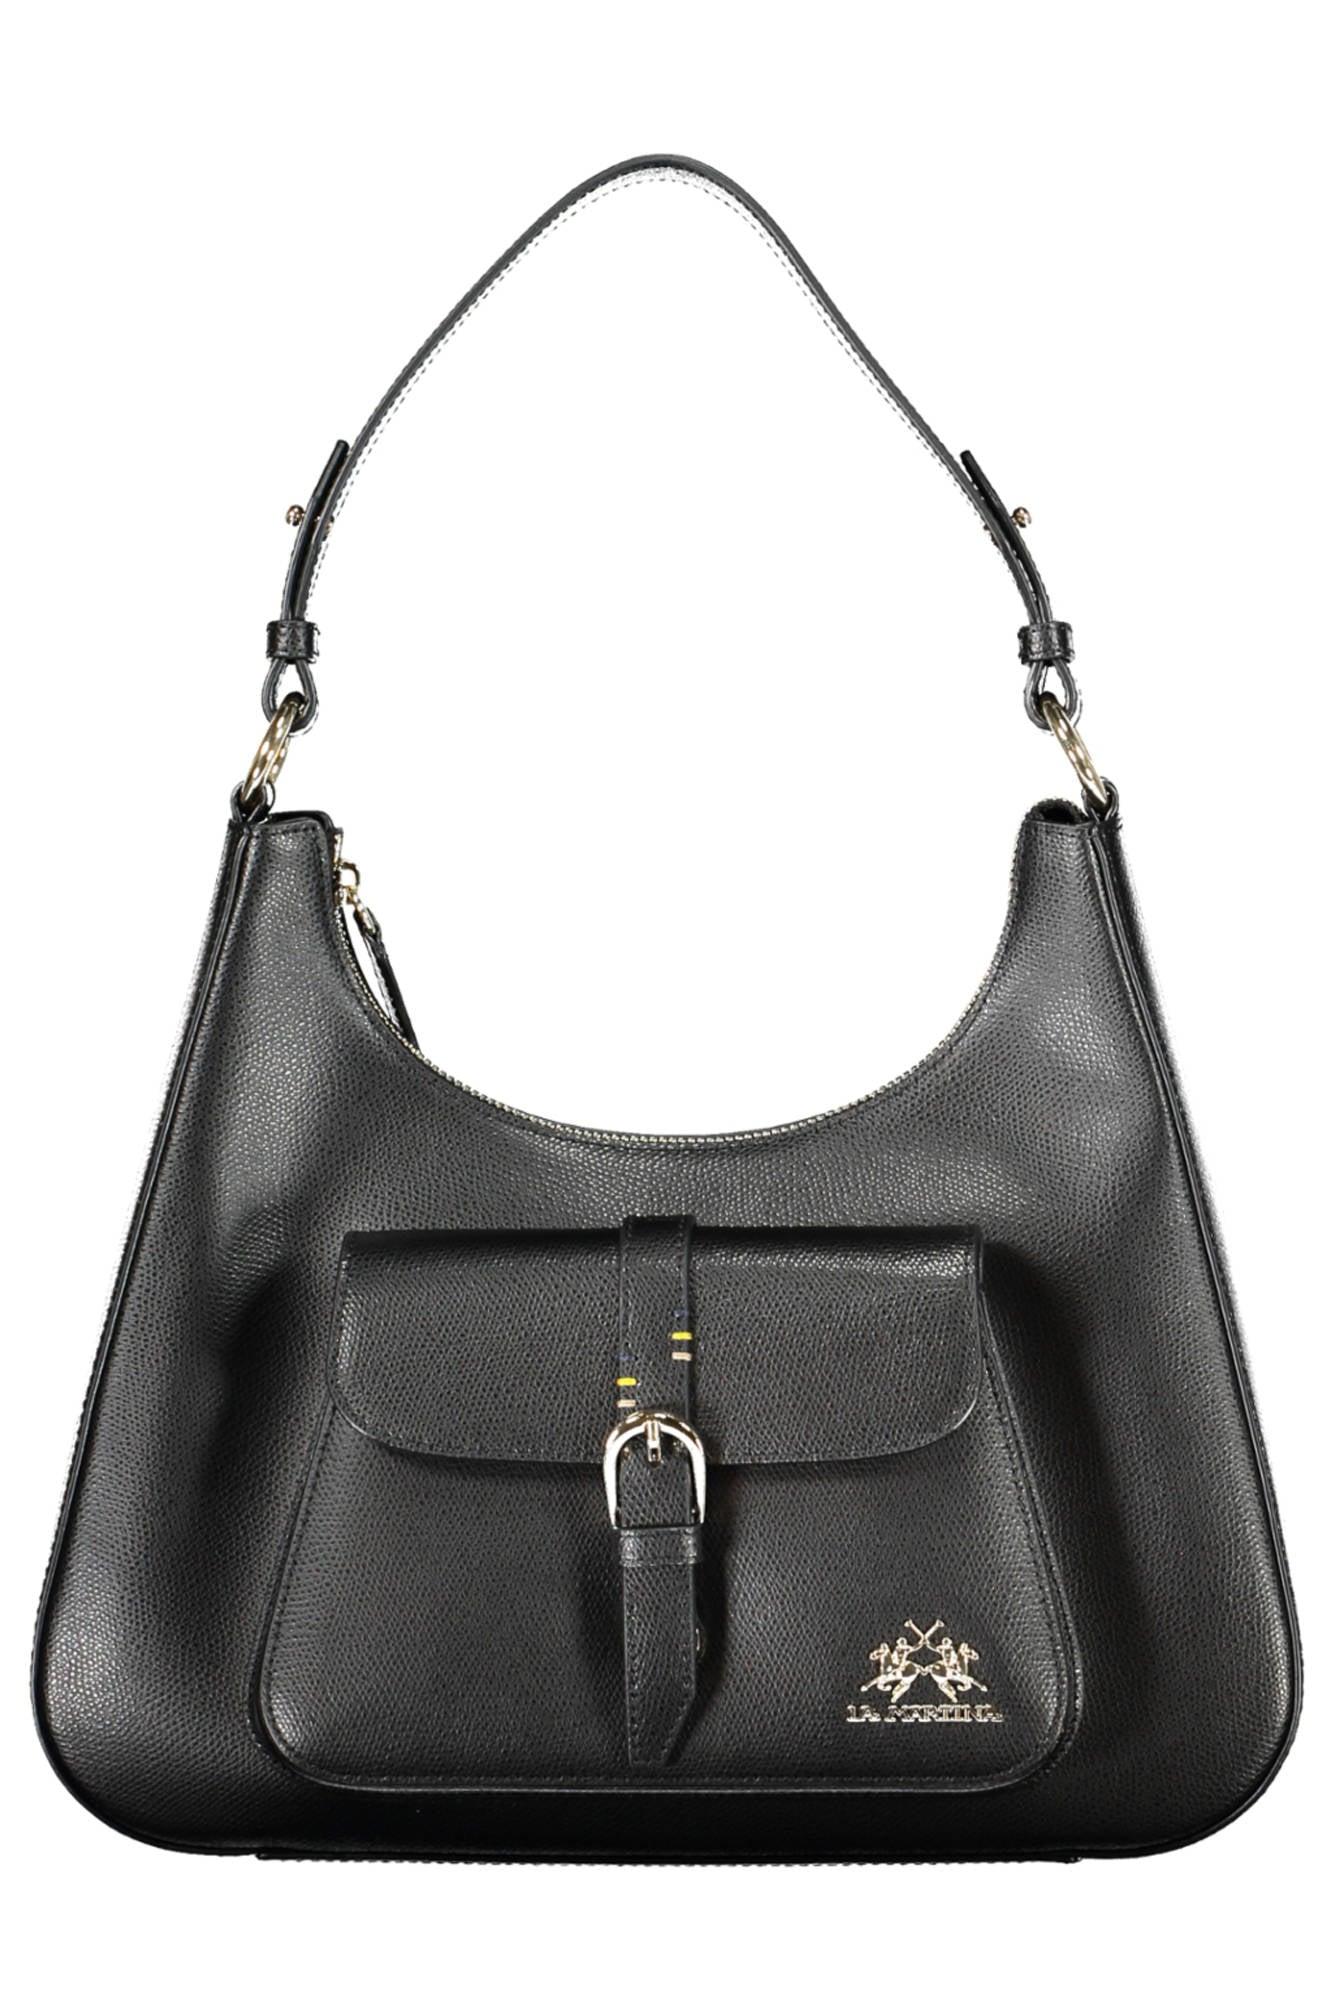 La Martina Leather Handbag in Black | Lyst